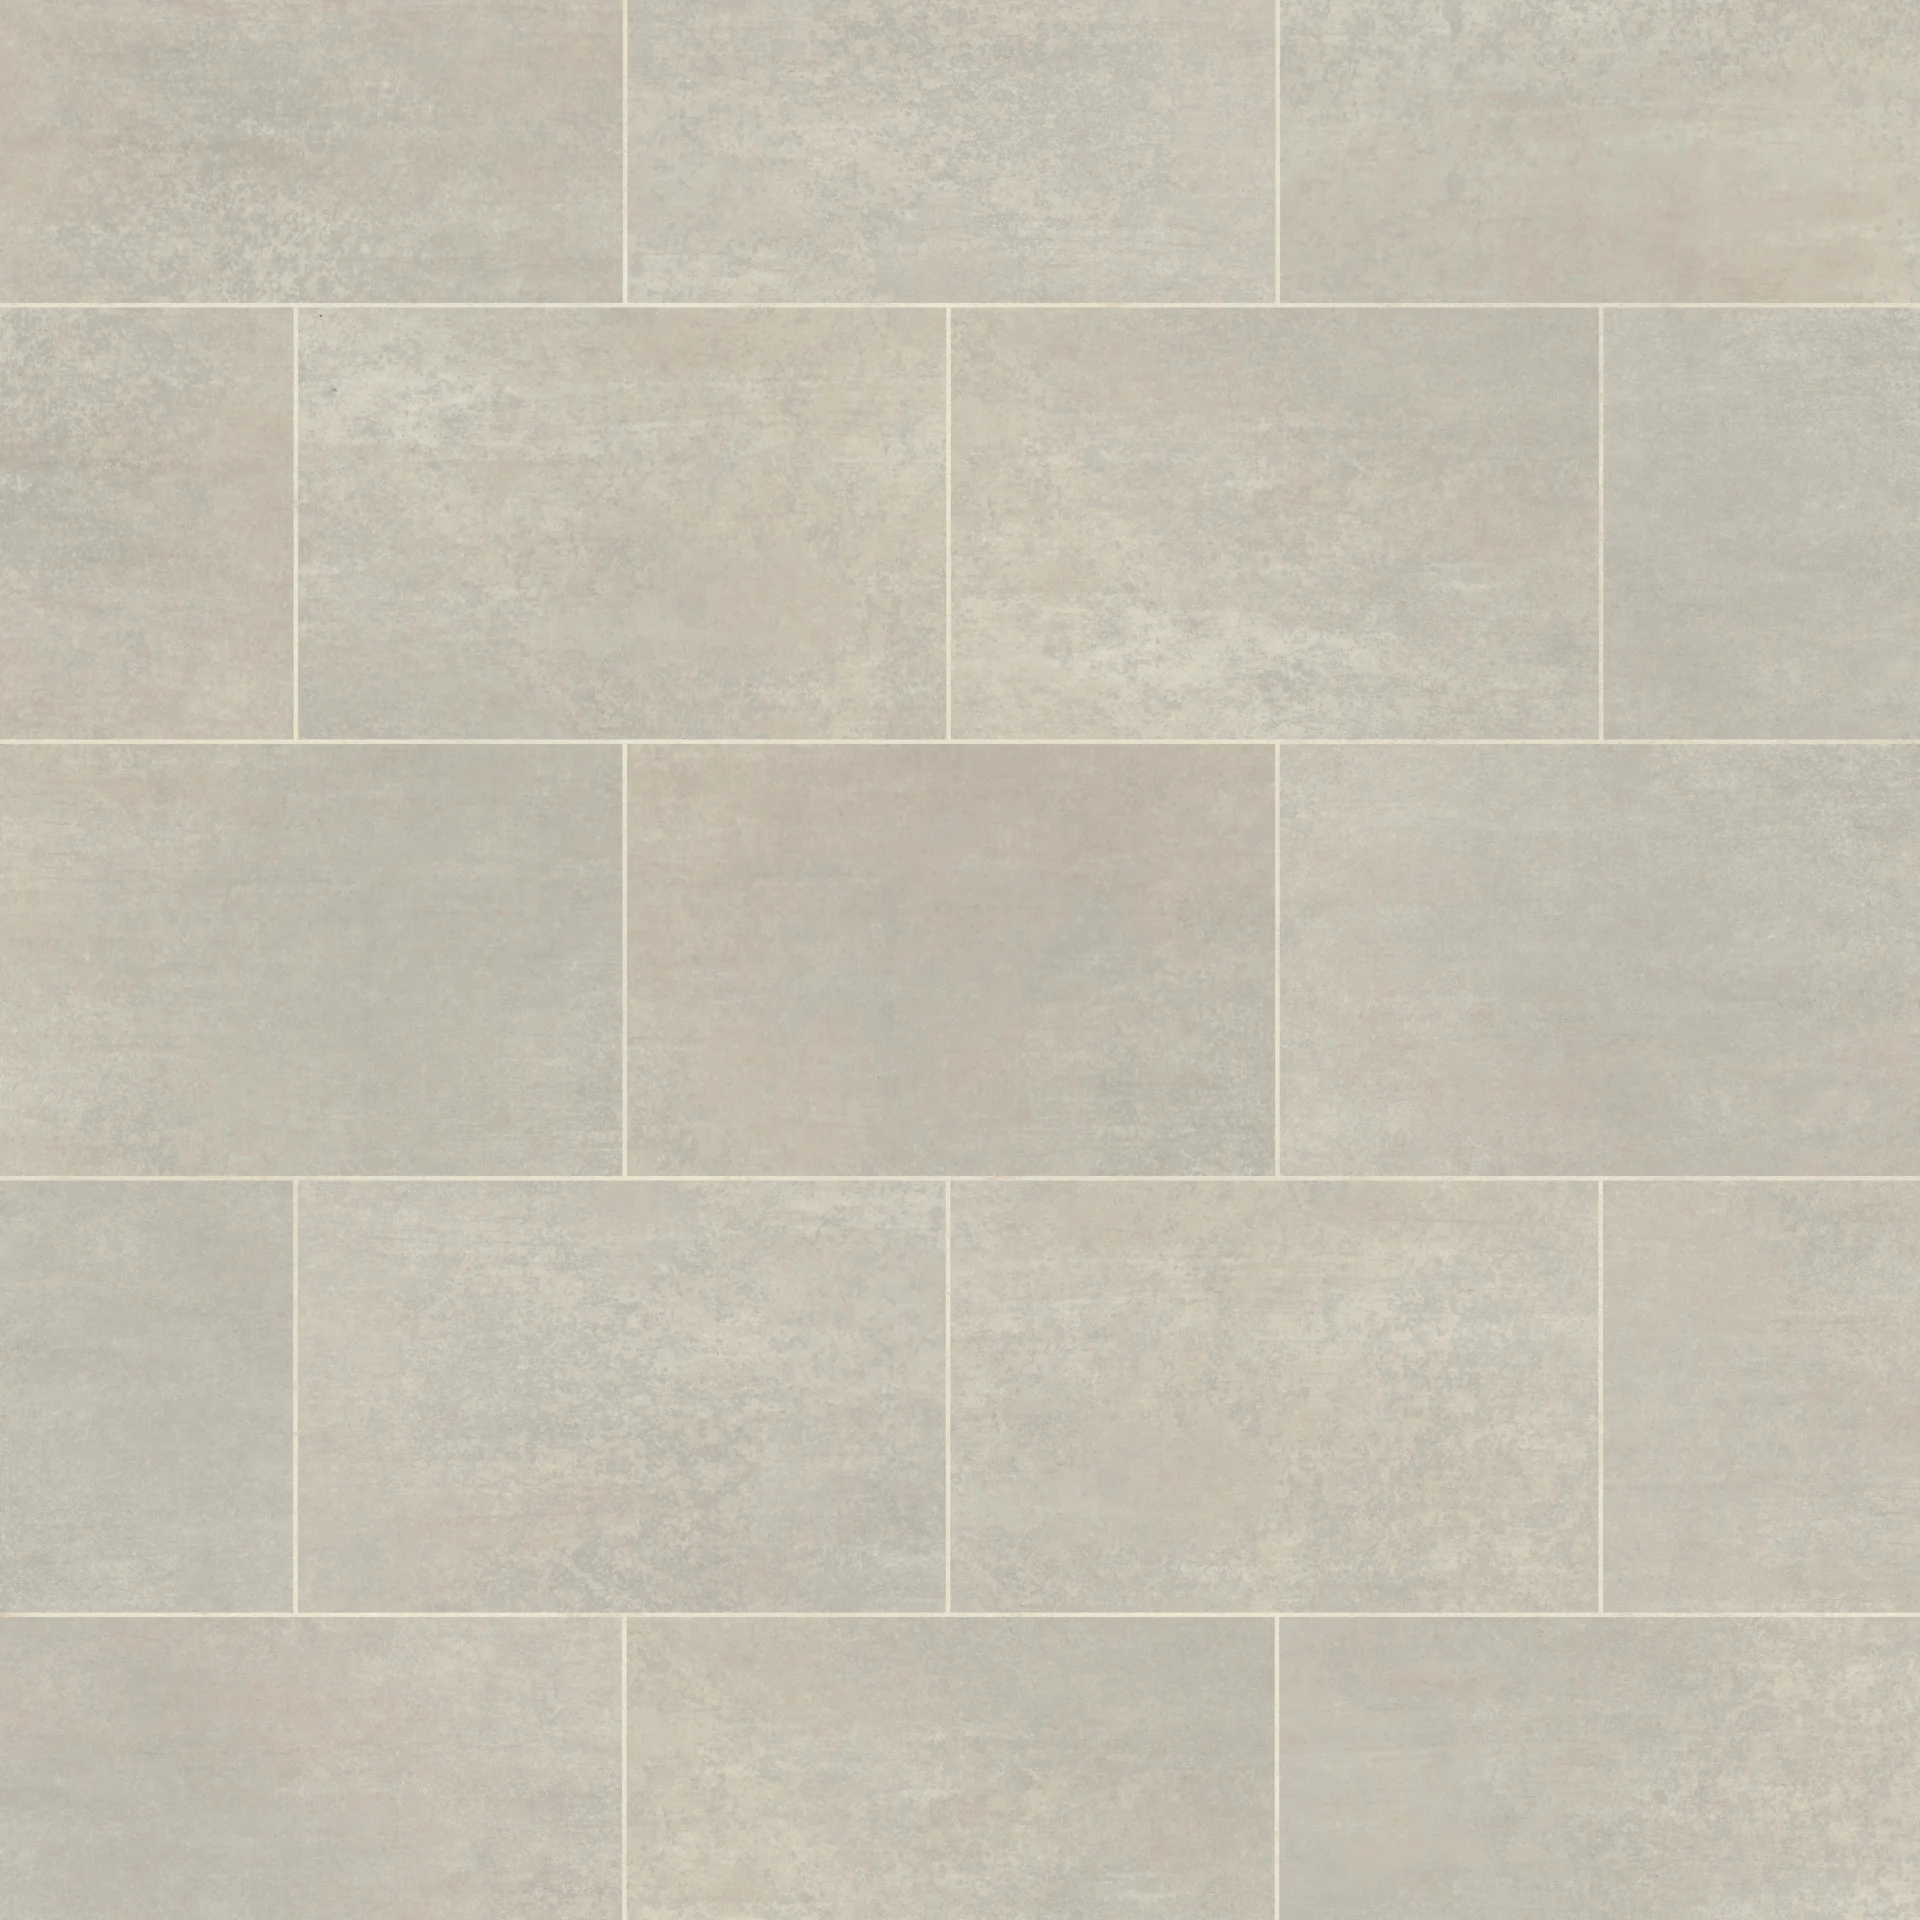 Karndean Knight Tile - Dove Grey Concrete ST21